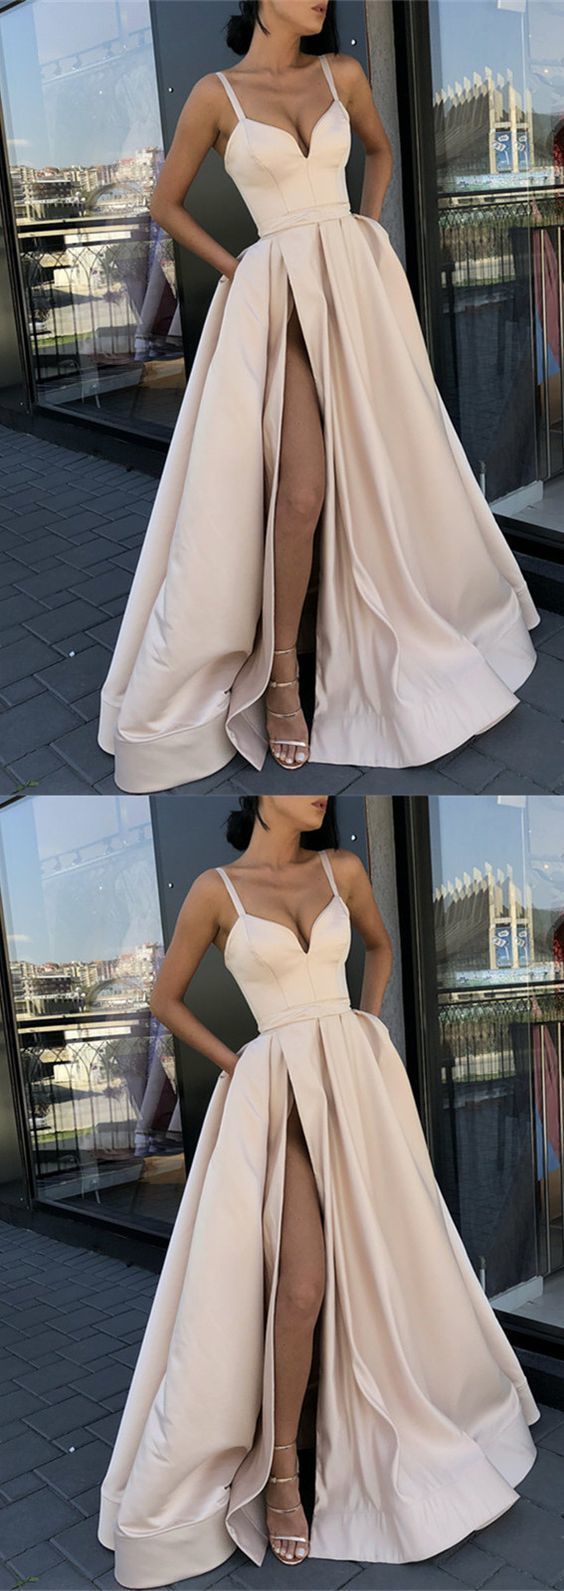 Prom Dress 2020 Slit Skirt ,Evening Dress, Winter Formal Dress,Pageant Dance Dresses, Graduation School Party Gown, PC0037 - Promcoming